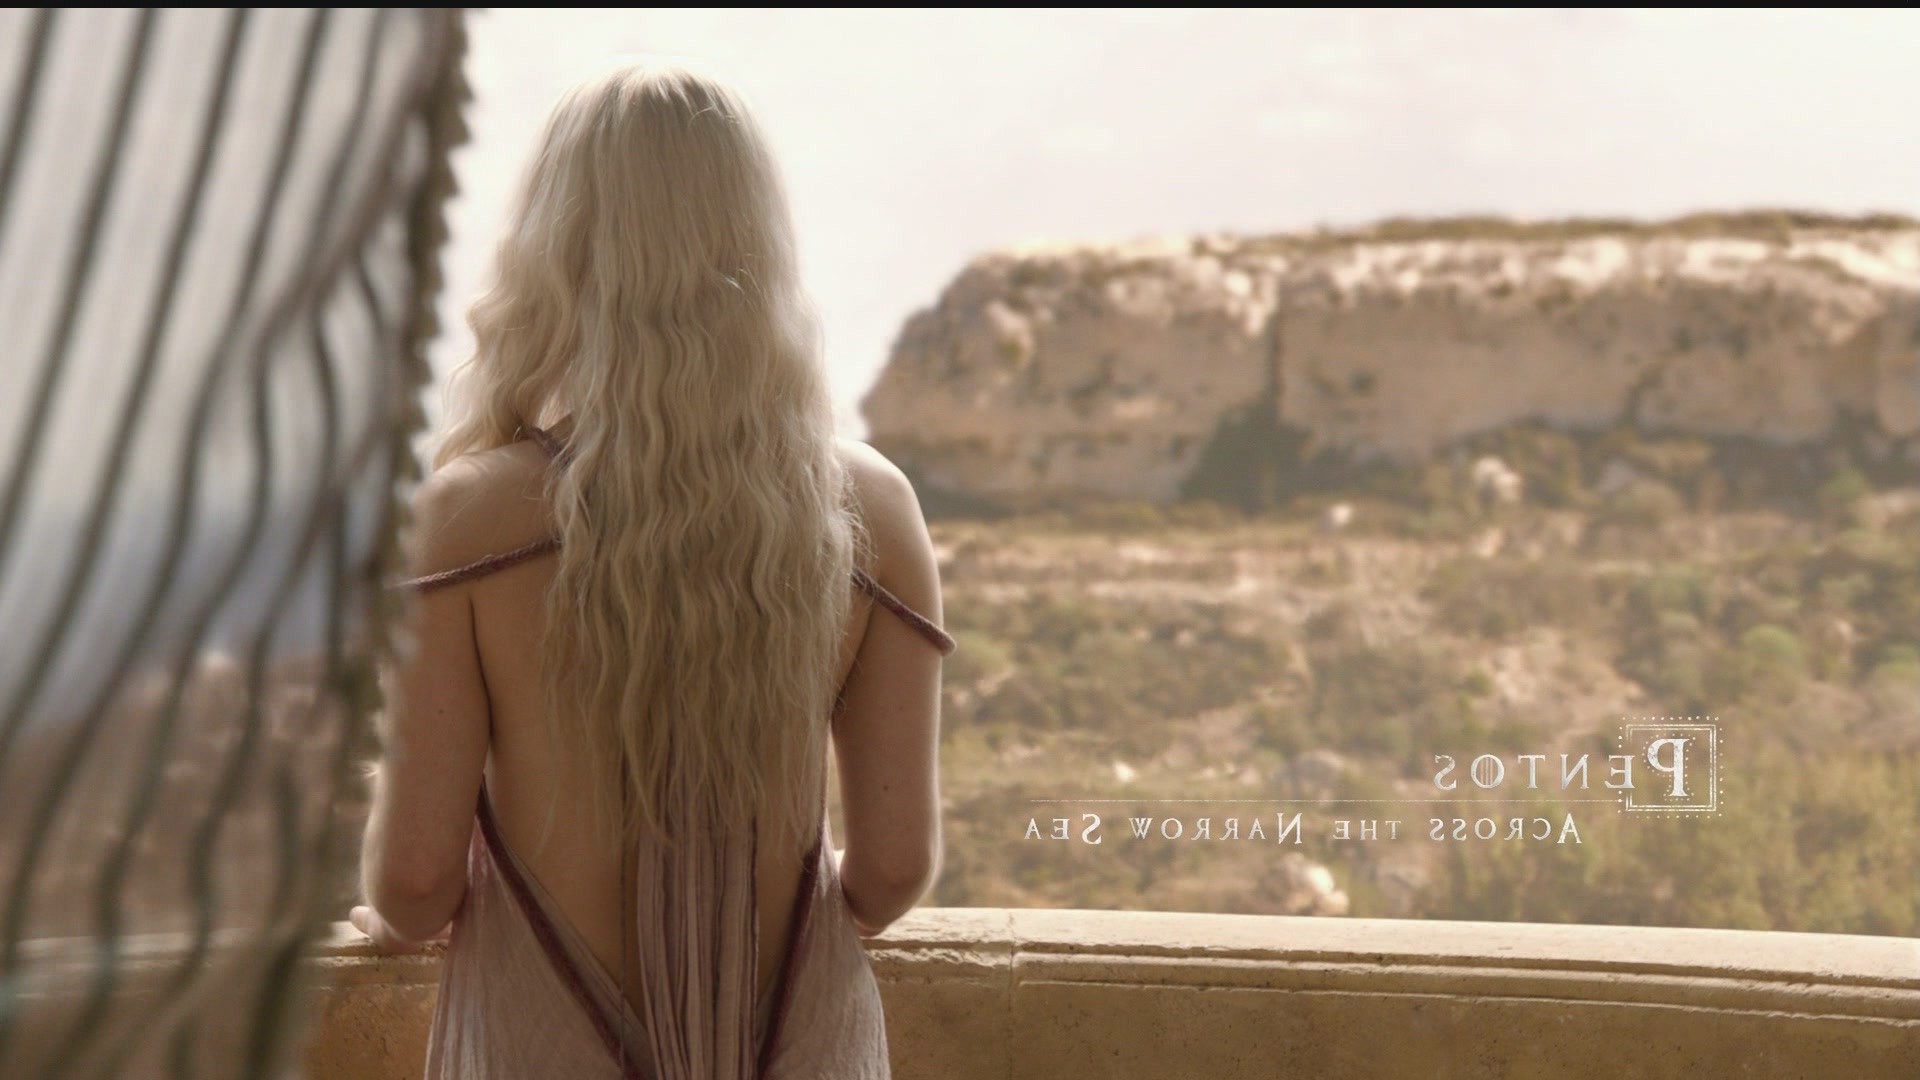 Download hd wallpapers of 3367-Game Of Thrones, Daenerys Targaryen, Emilia Clarke...